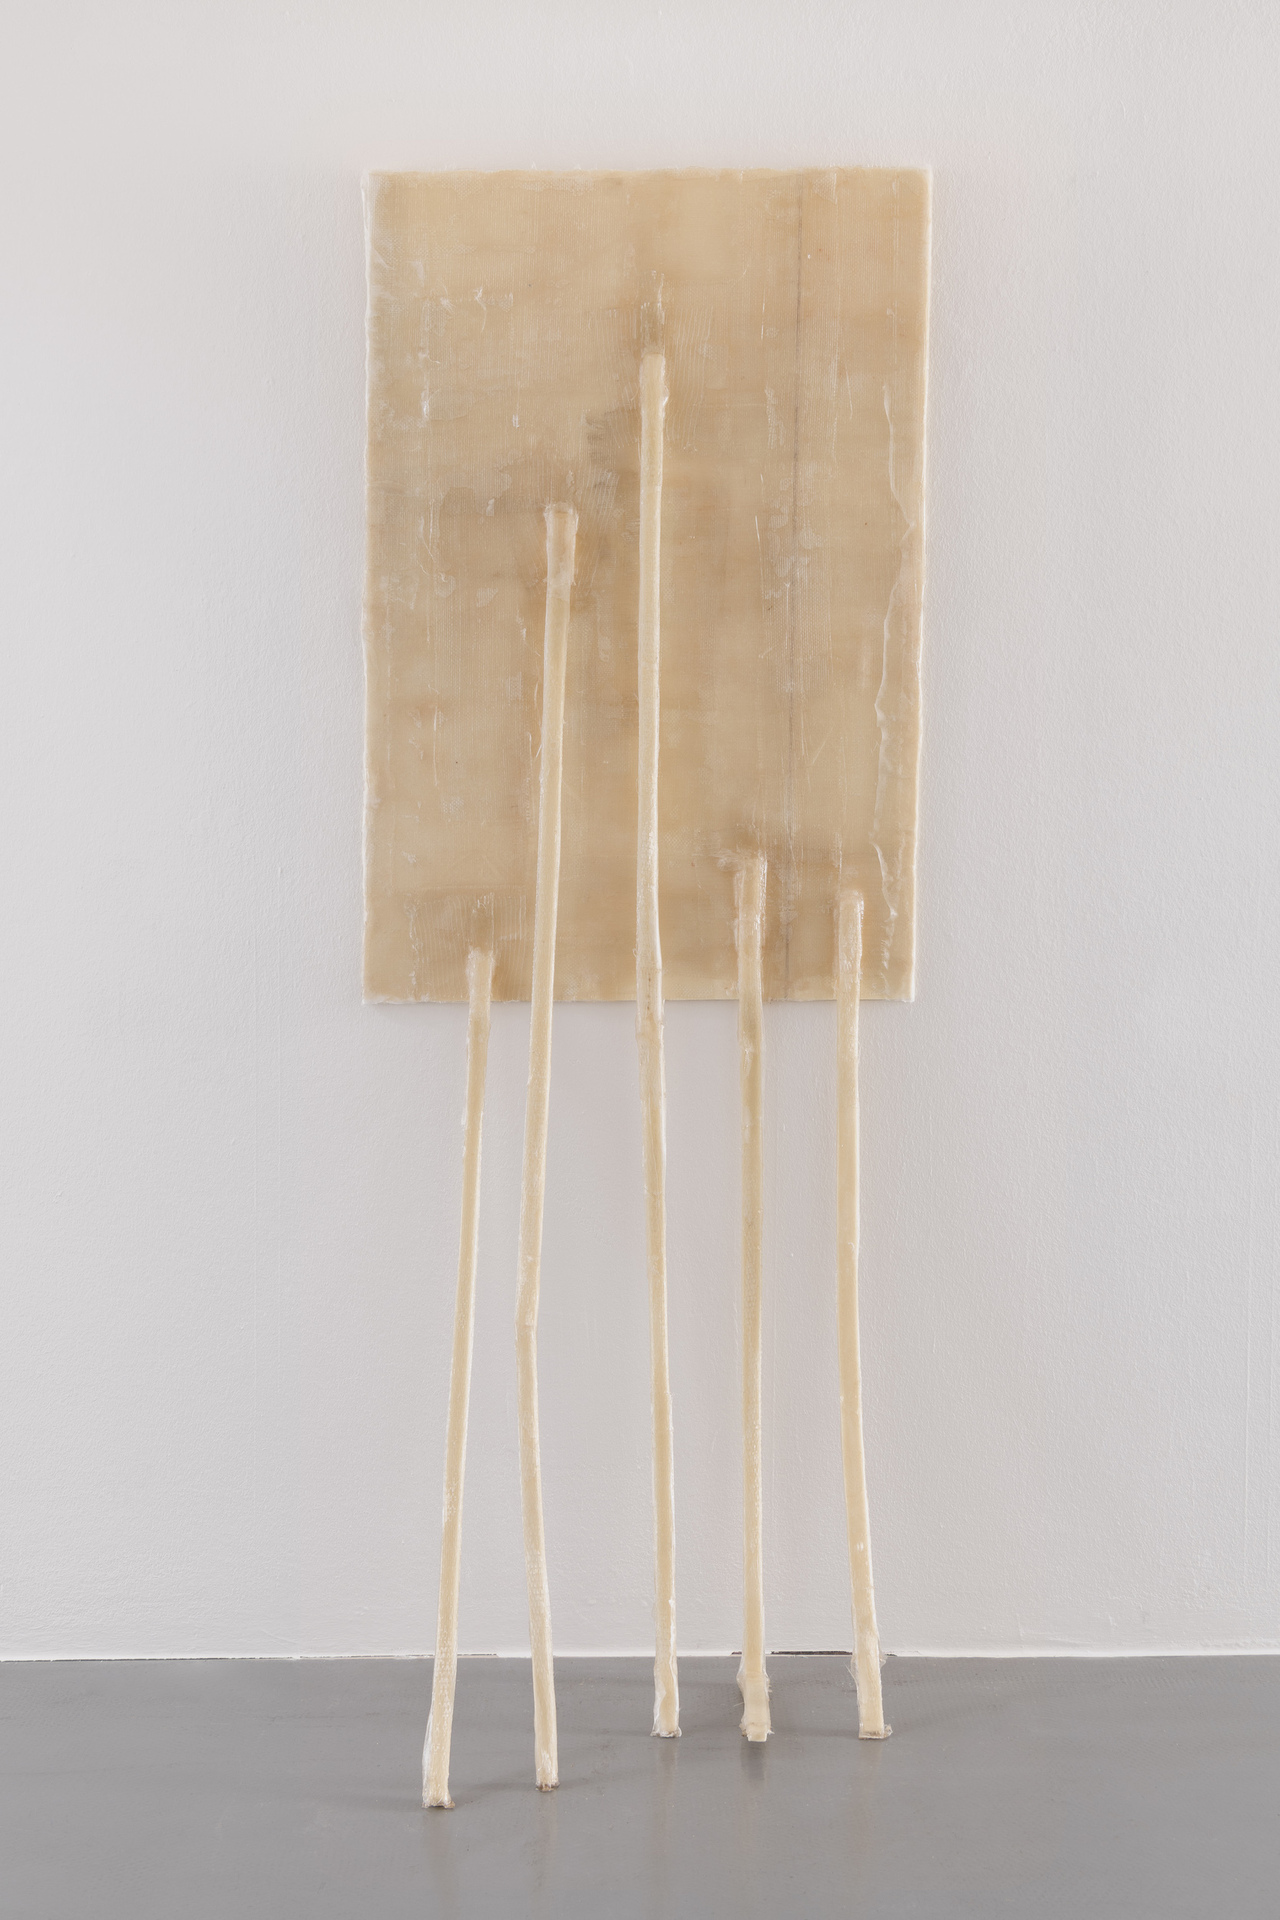 Arian de Vette, “E.S.M (II)”, 2021, polyurethane, fiberglass, 187 x 60 x 57 cm